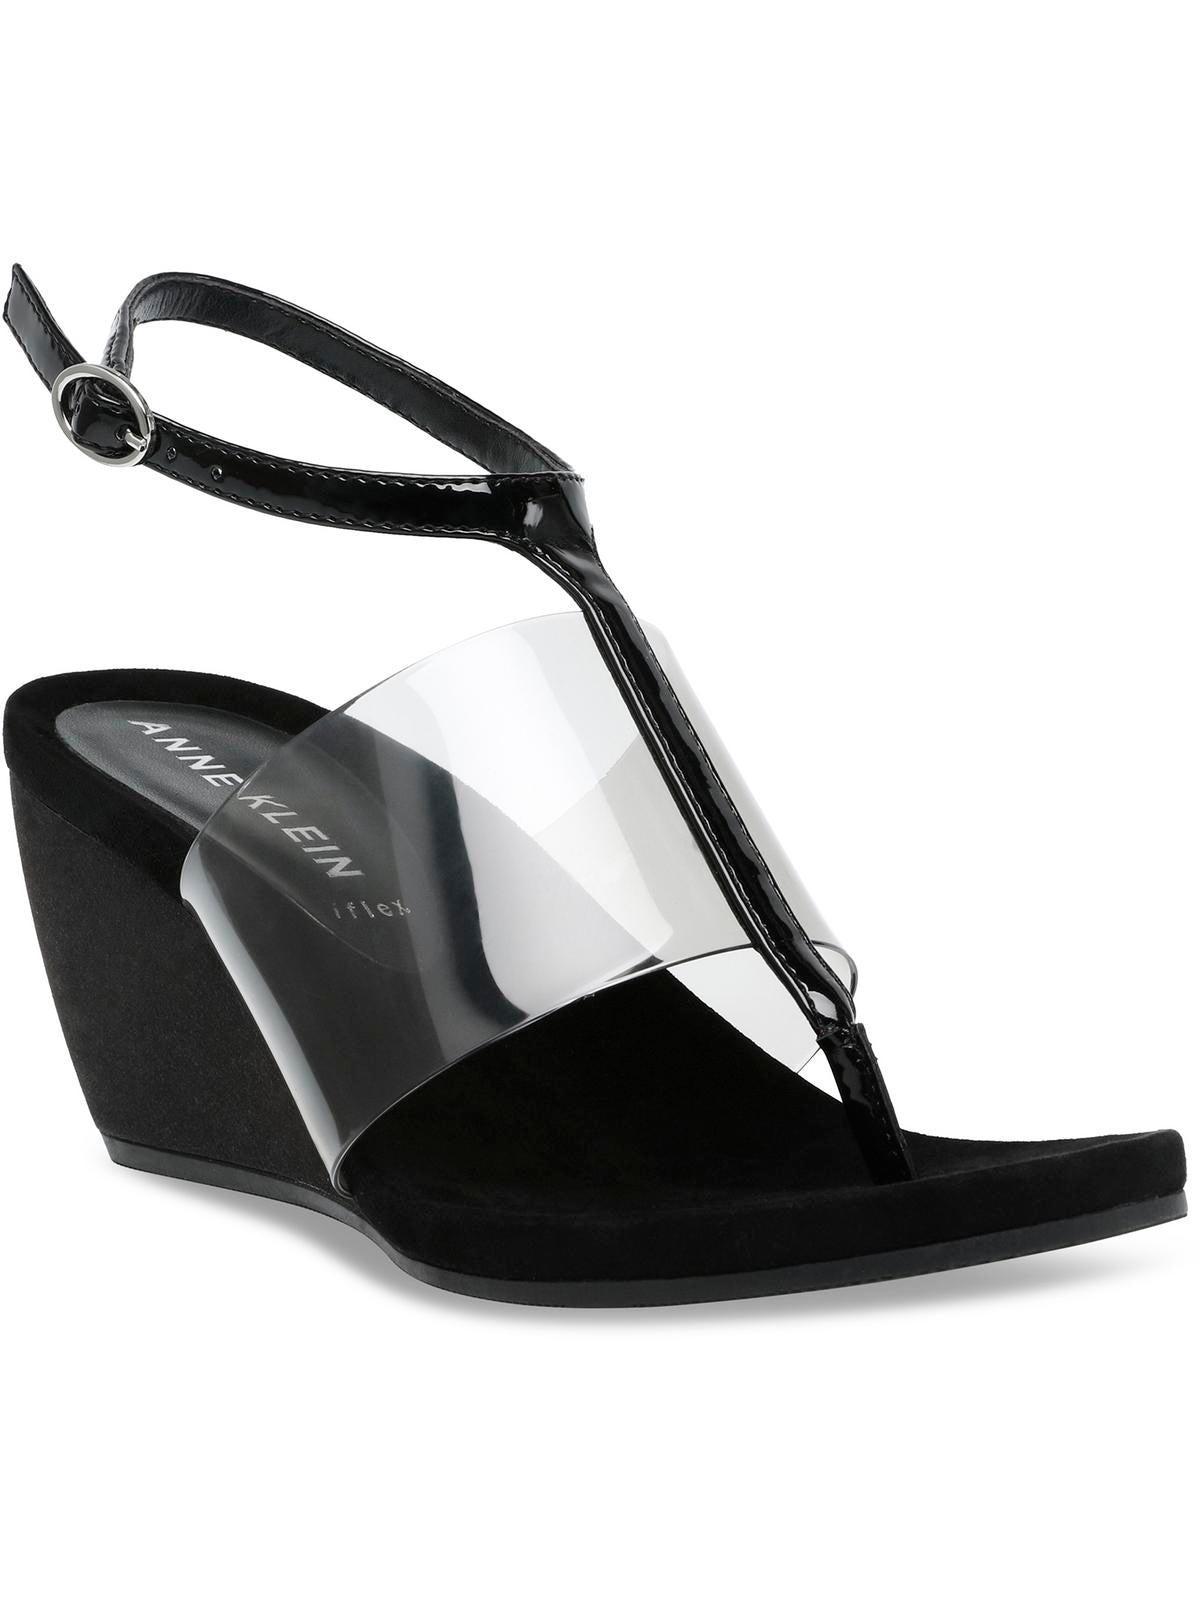 Anne Klein Ivana (Black) Women's Shoes Product Image